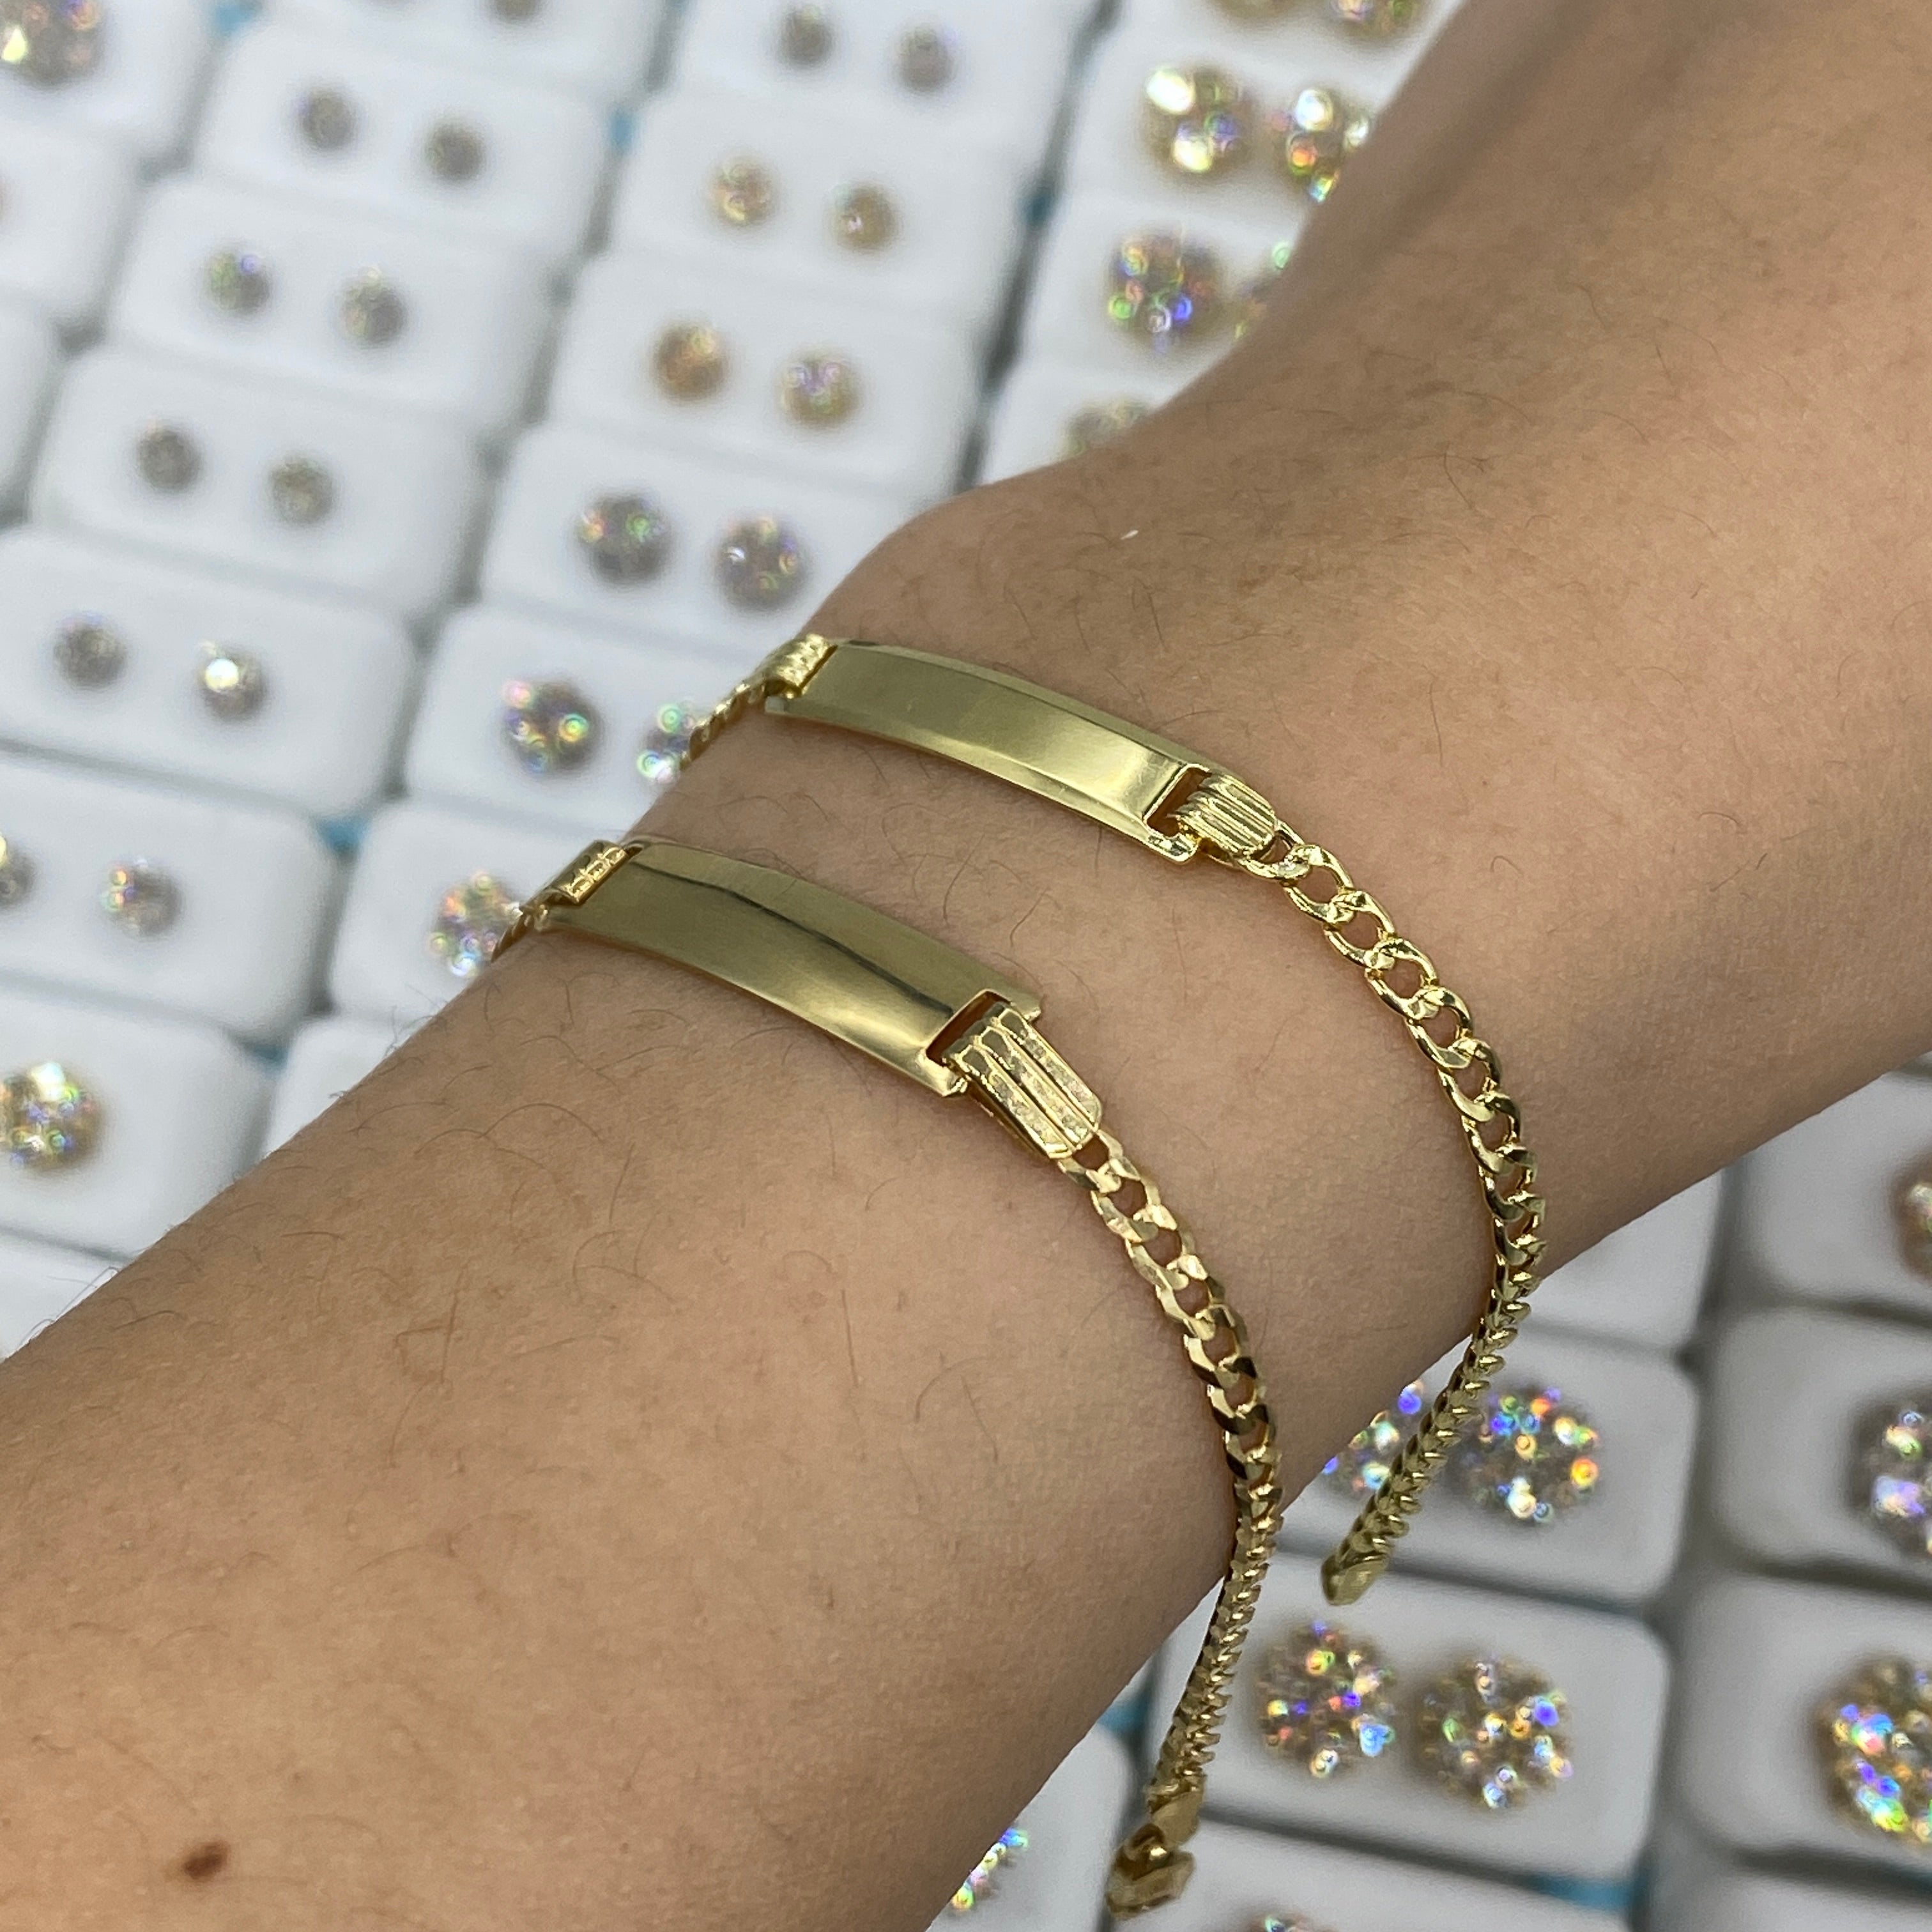 10K Gold Bangle with Diamond Accent | Hug Jewelers